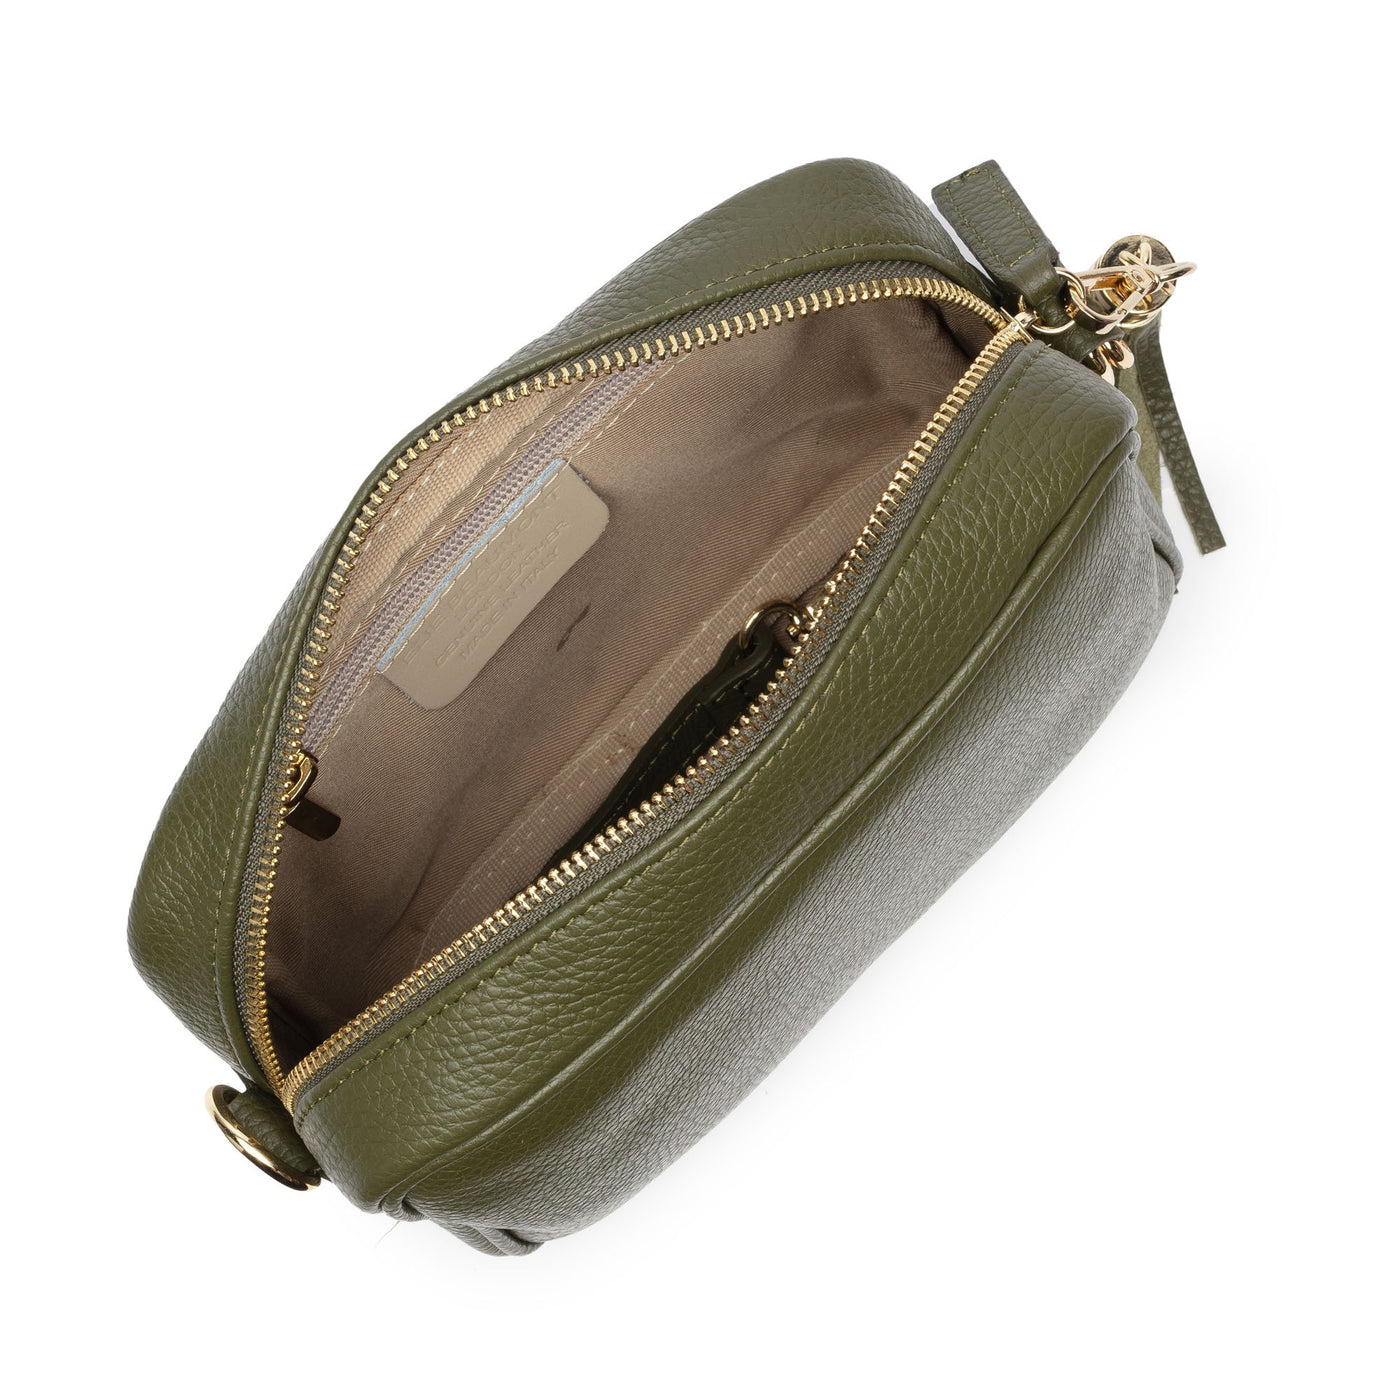 Elie Beaumont Designer Leather Crossbody Bag - Olive Green (GOLD Fittings)